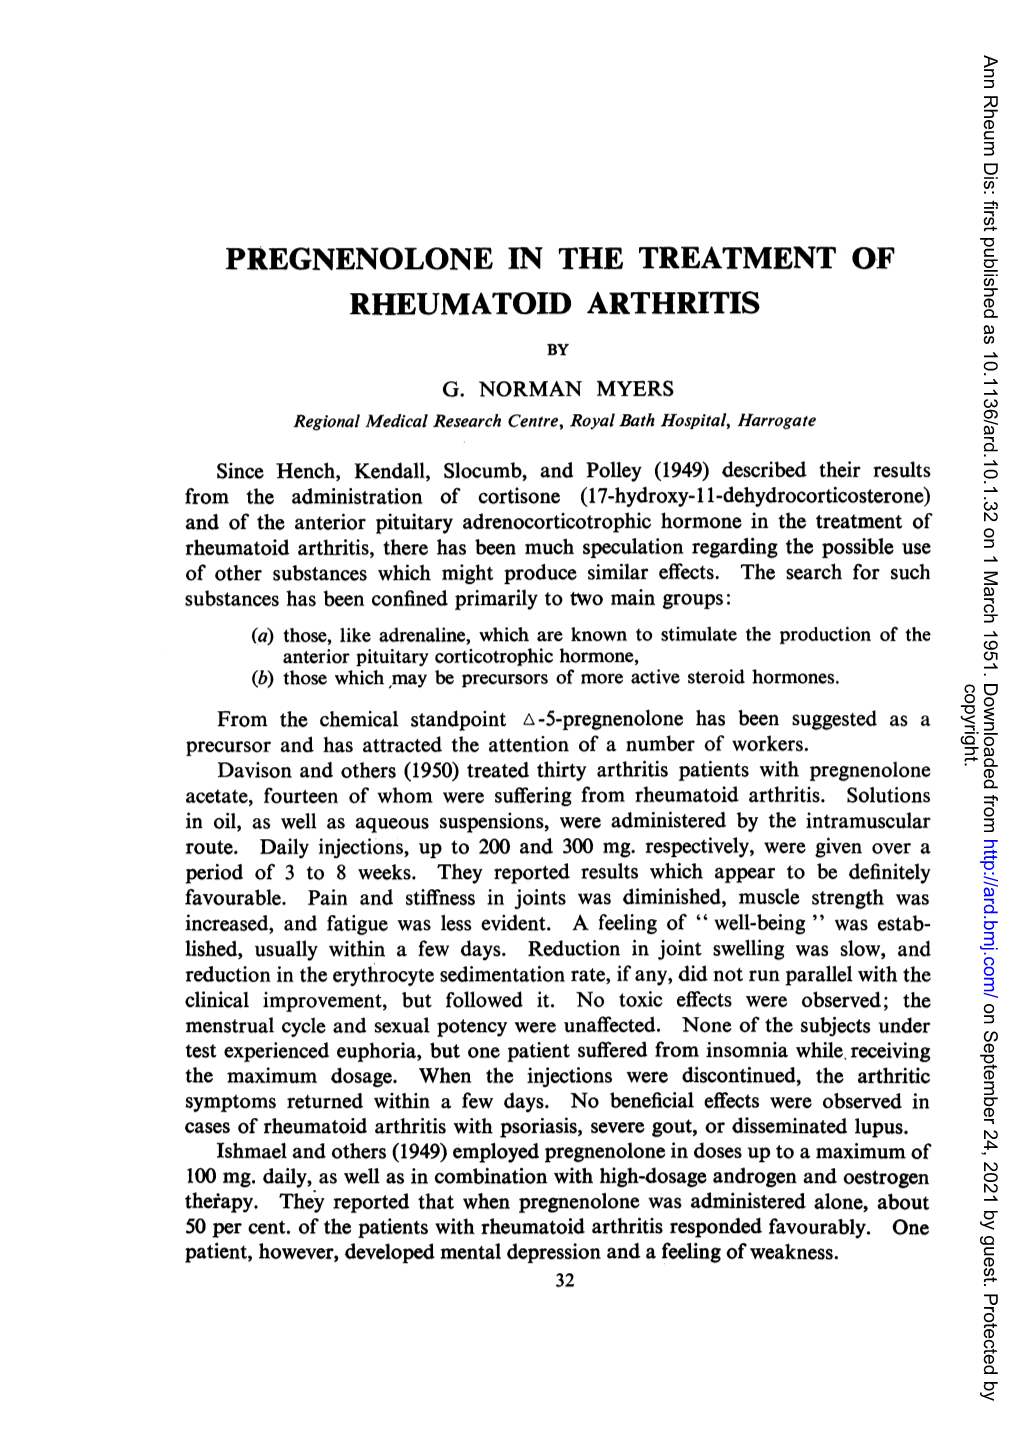 Pregnenolone in the Treatment of Rheumatoid Arthritis by G